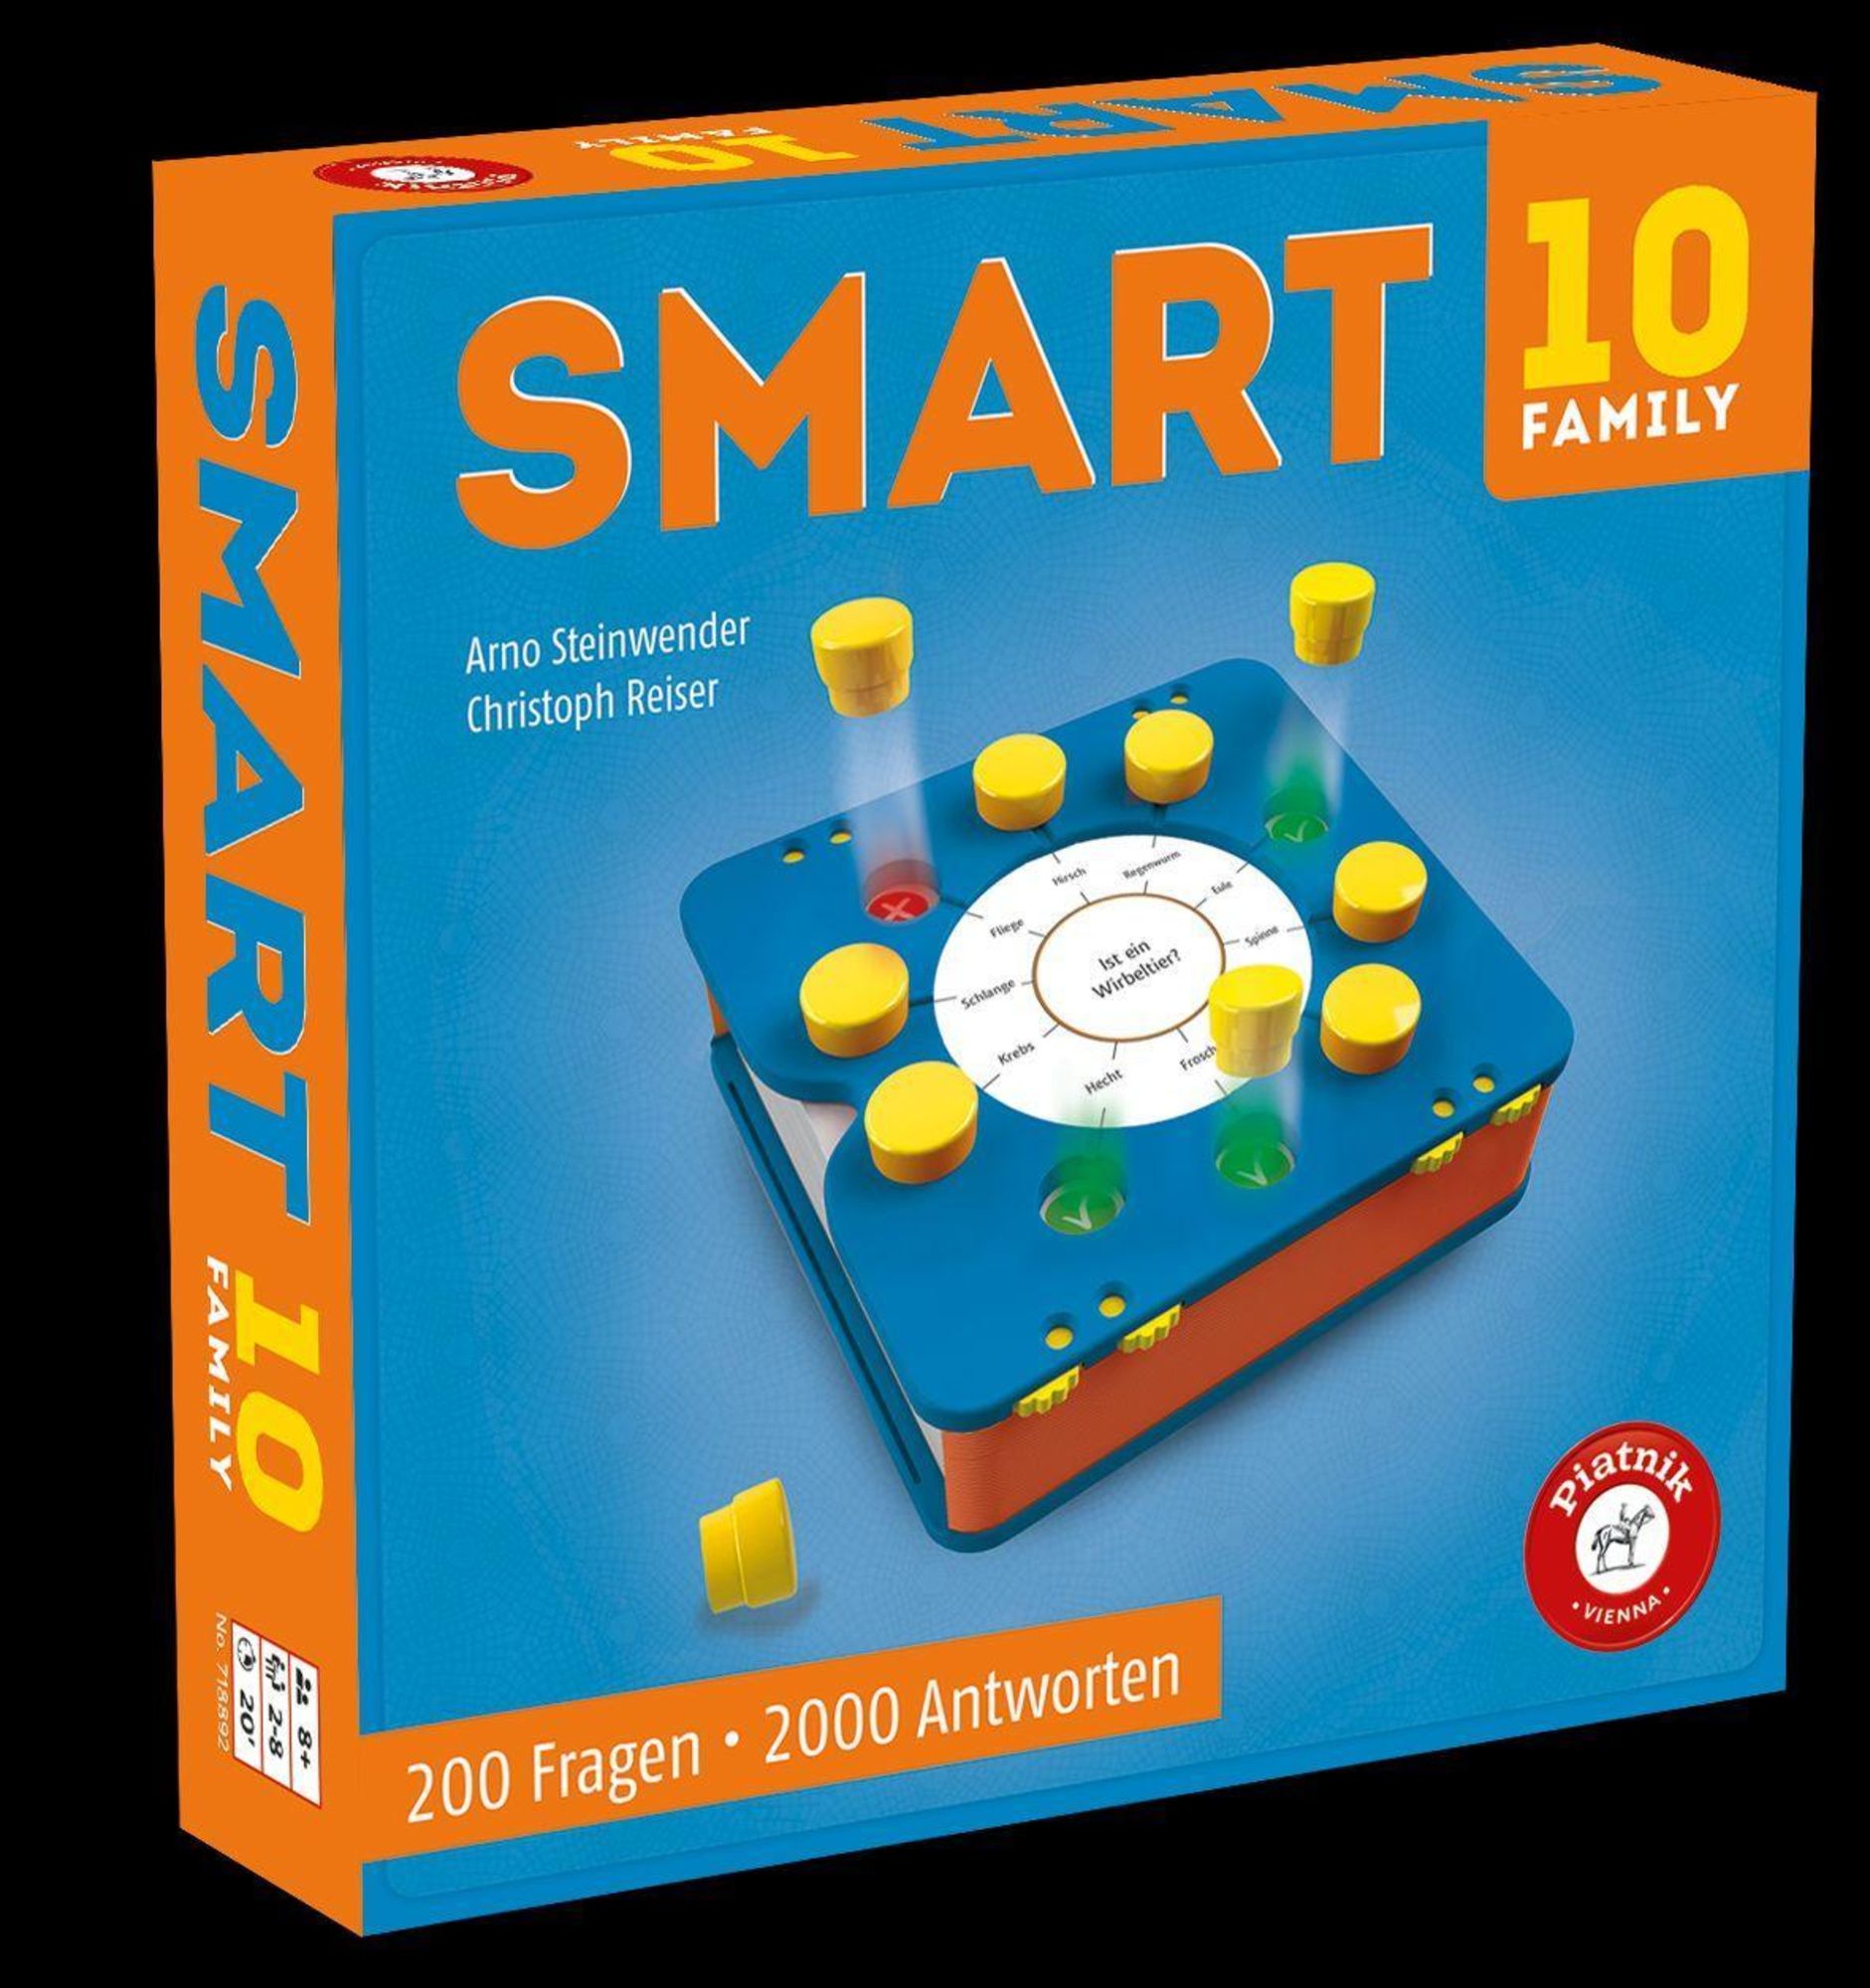 Piatnik Smart 10 Family | 7188